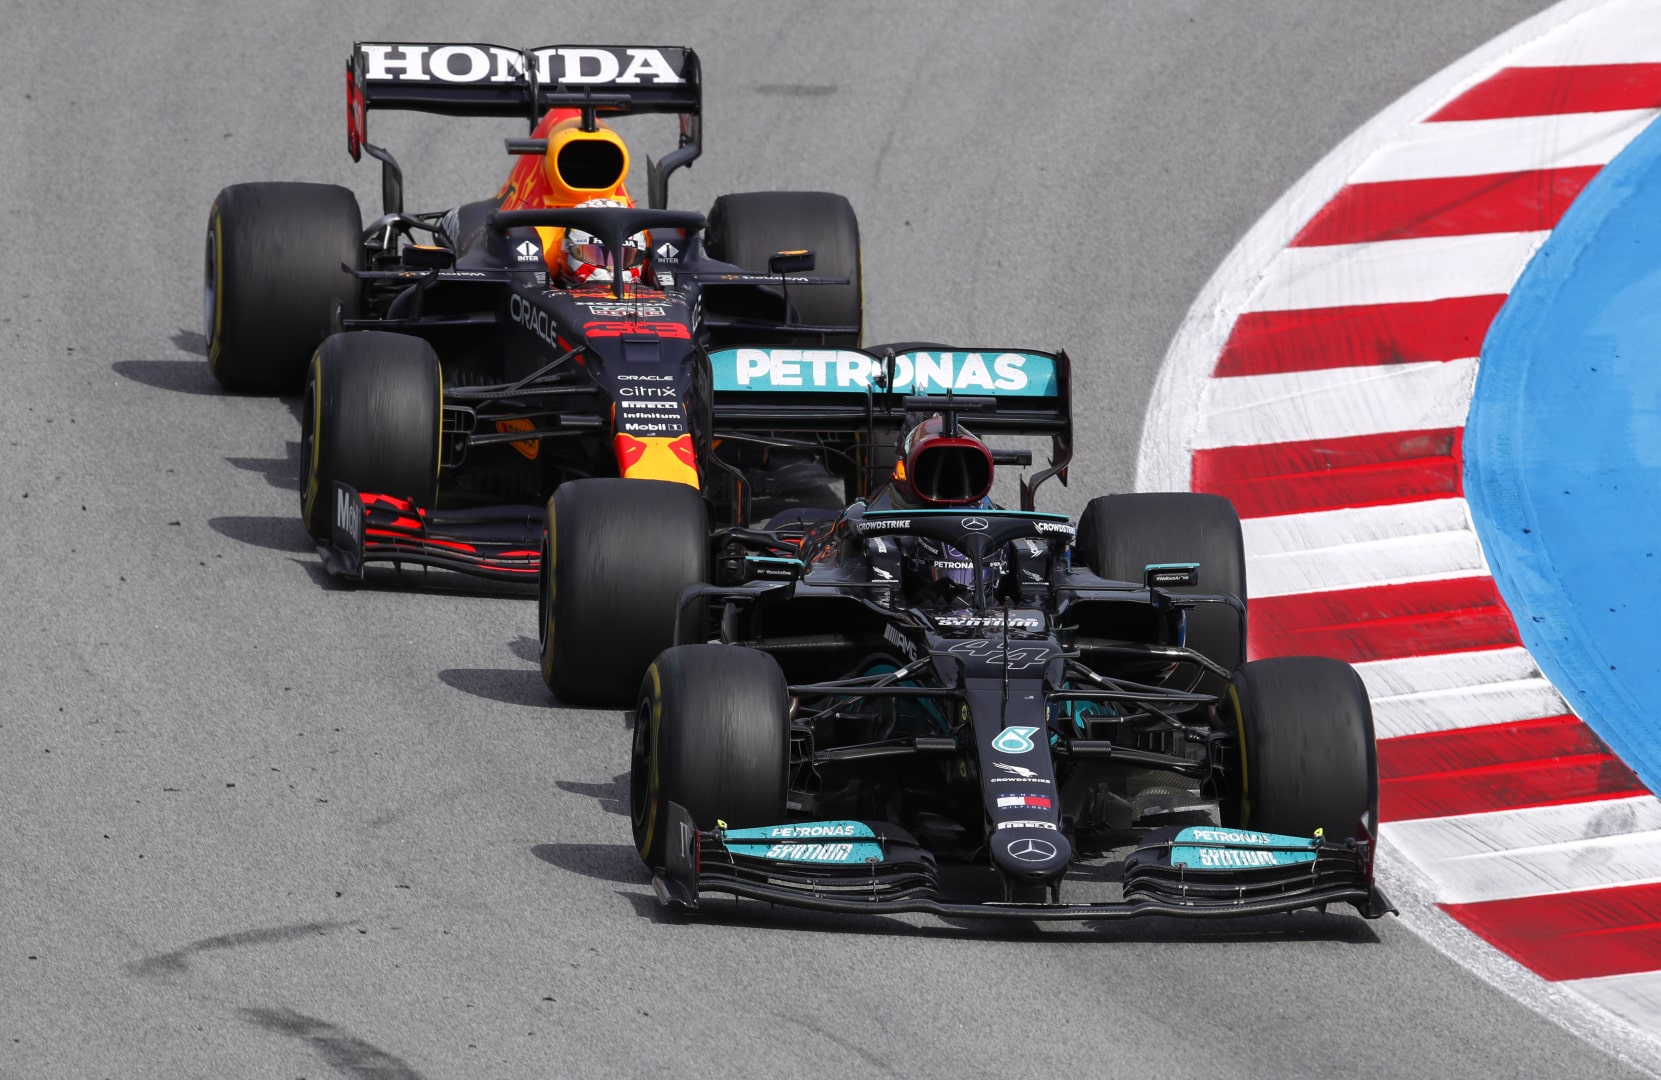 2021 Spanish Grand Prix, Sunday - Lewis Hamilton & Max Verstappen